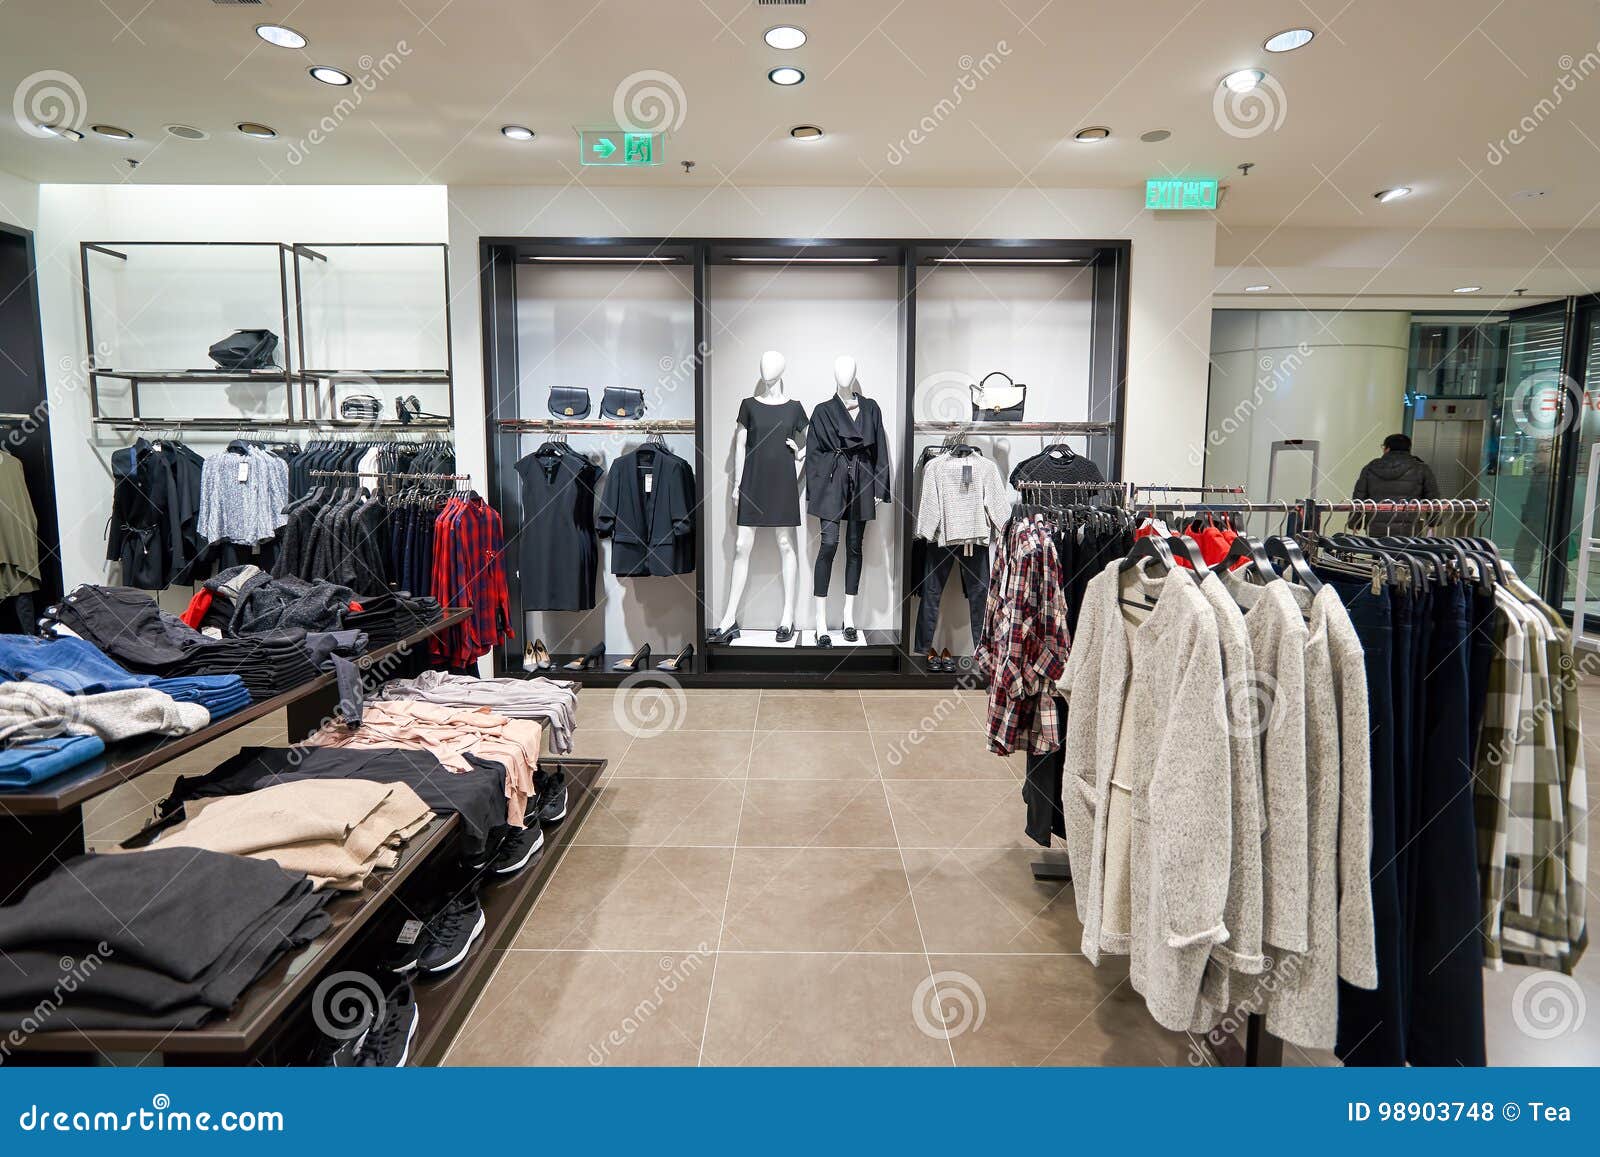 Zara editorial stock photo. Image of commerce, department - 98903748